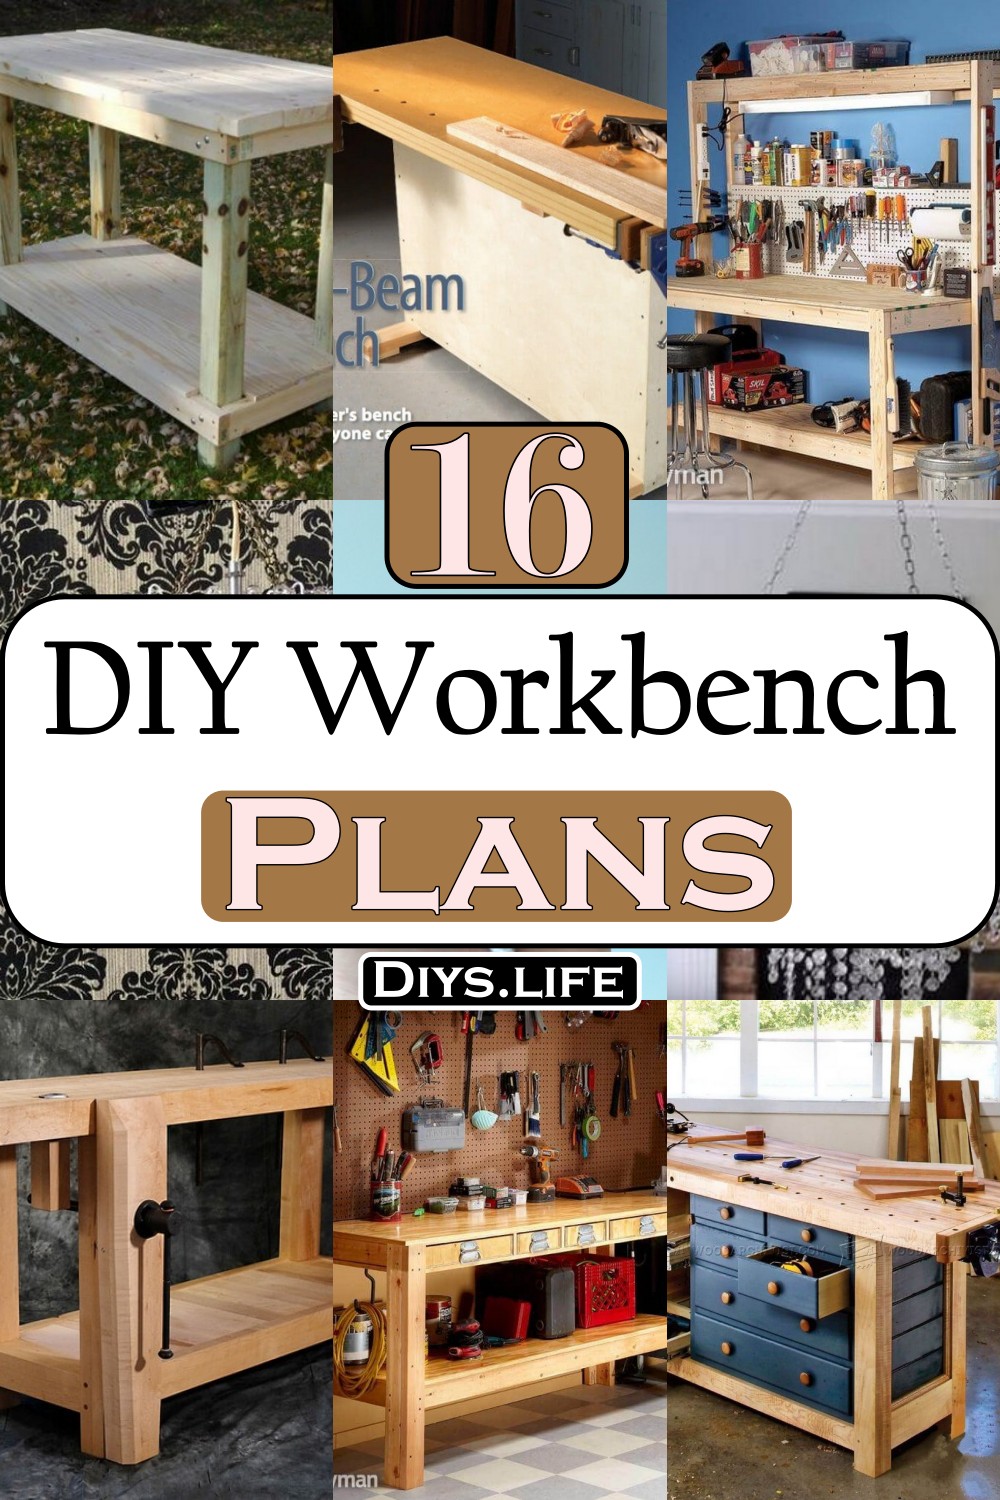 DIY Workbench Plans